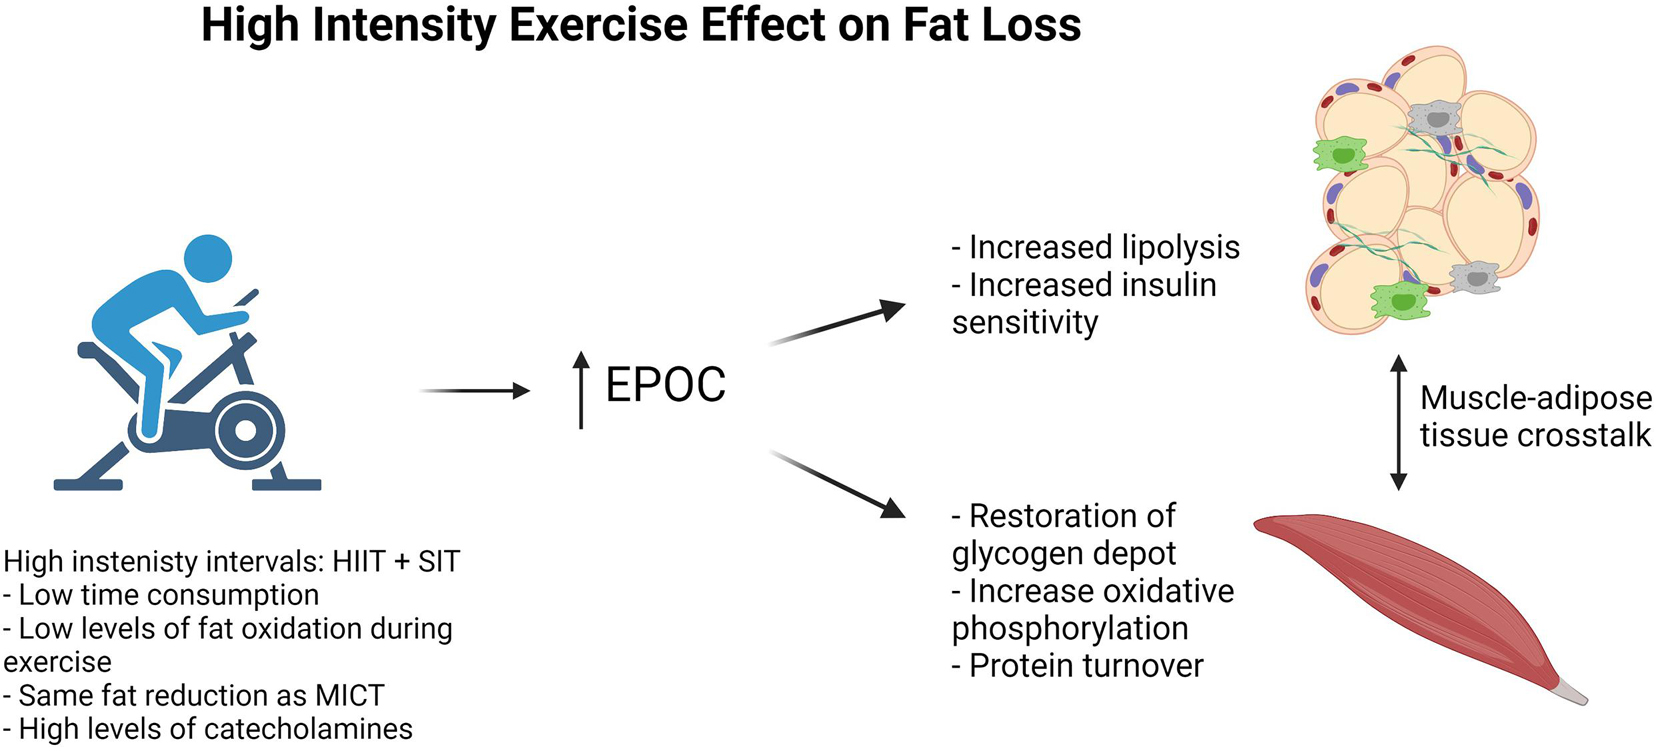 Subcutaneous fat and energy balance